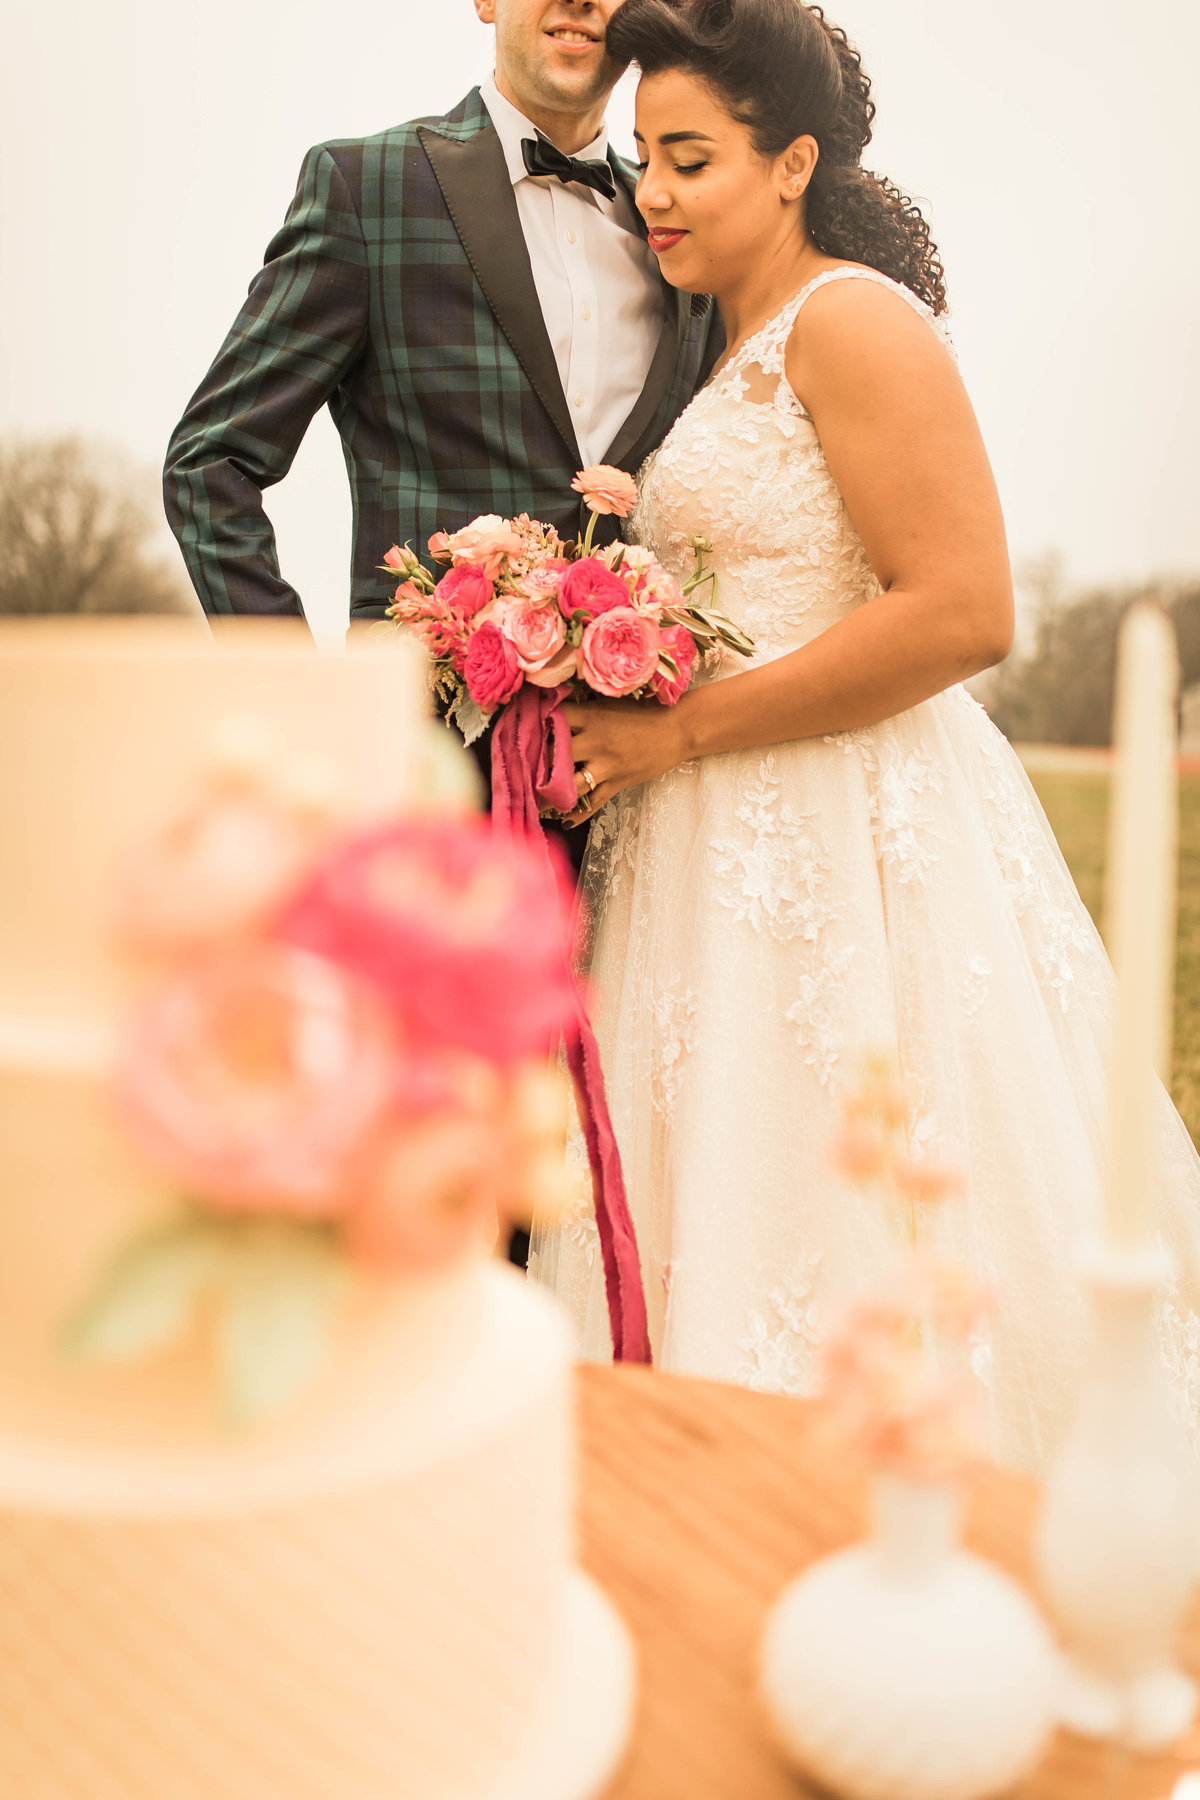 Retro Styled Shoot - Sophia and Andrew - St Louis Wedding Photographer - Allison Slater Photography 164